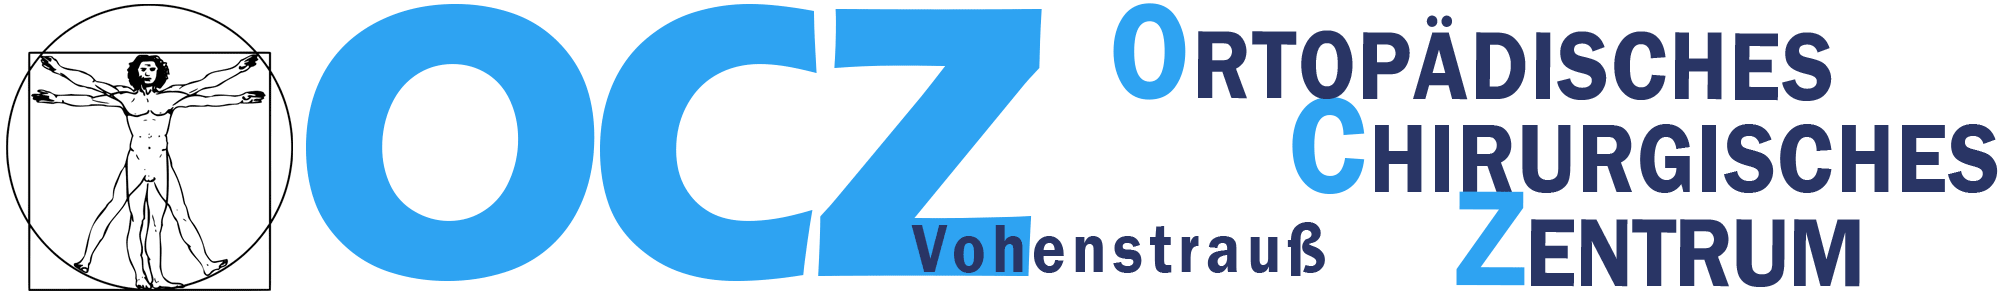 OCZ-Vohenstrauß